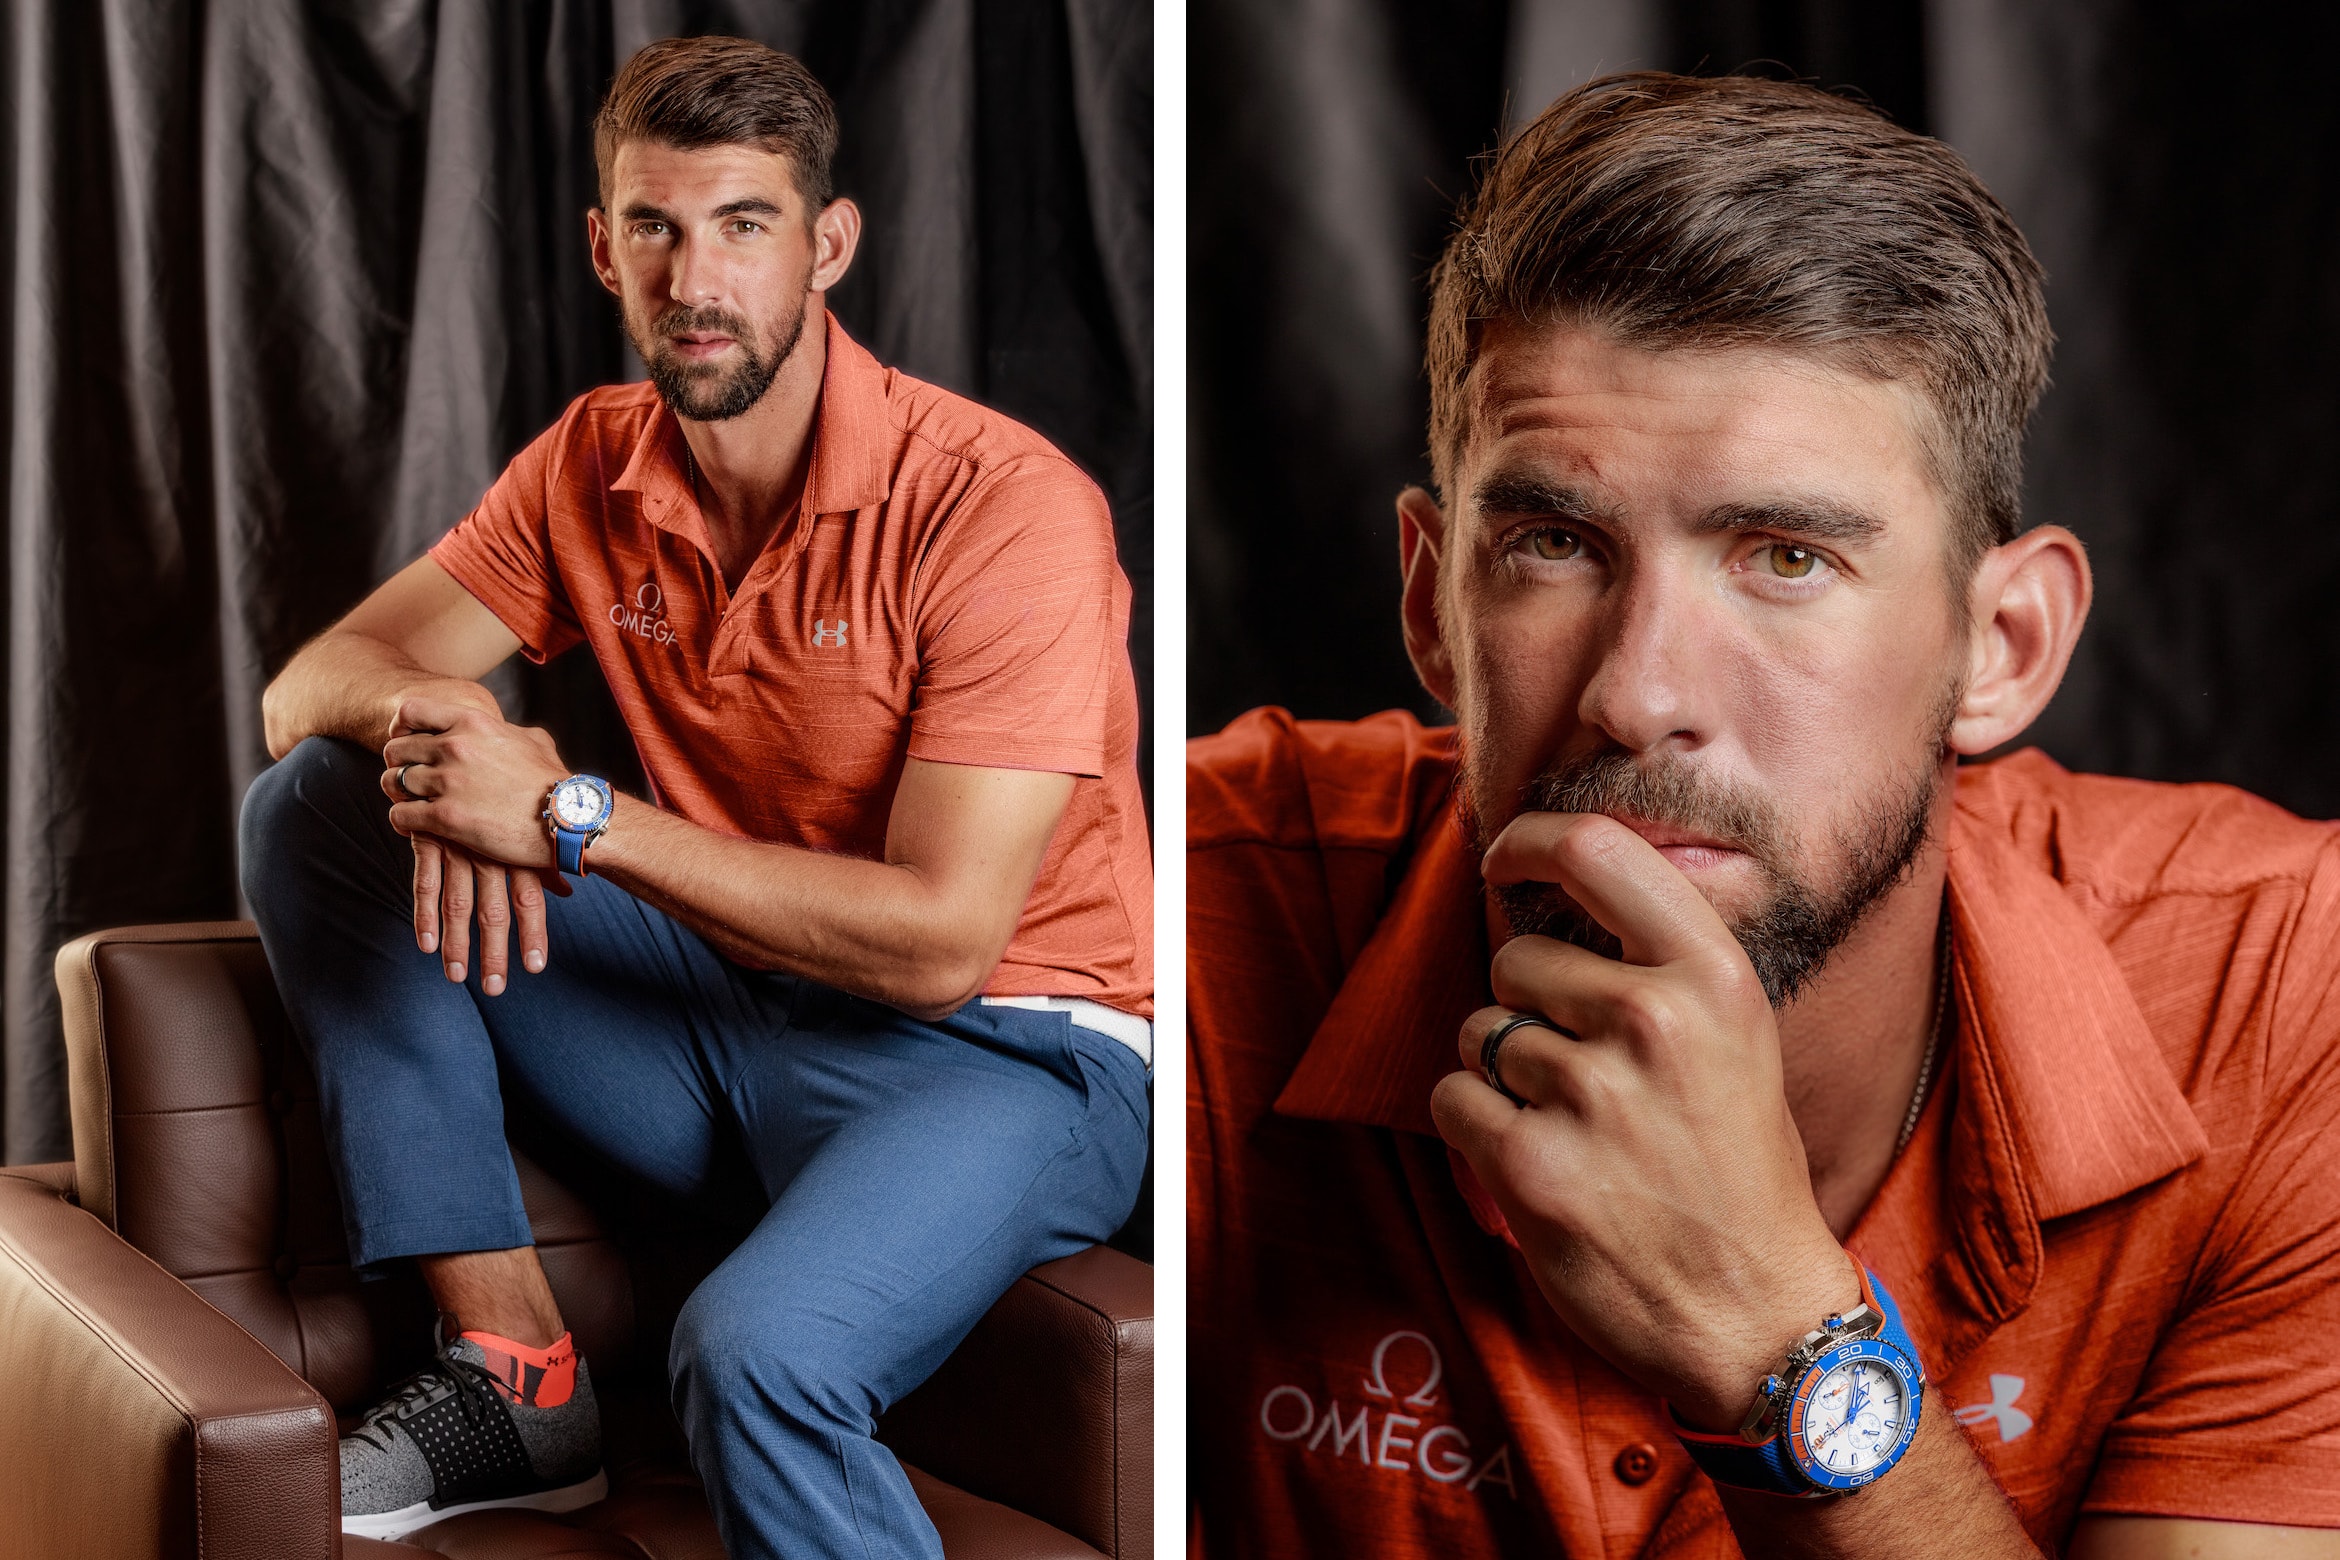 OMEGA 發佈海馬系列海洋宇宙「Michael Phelps」限量腕錶